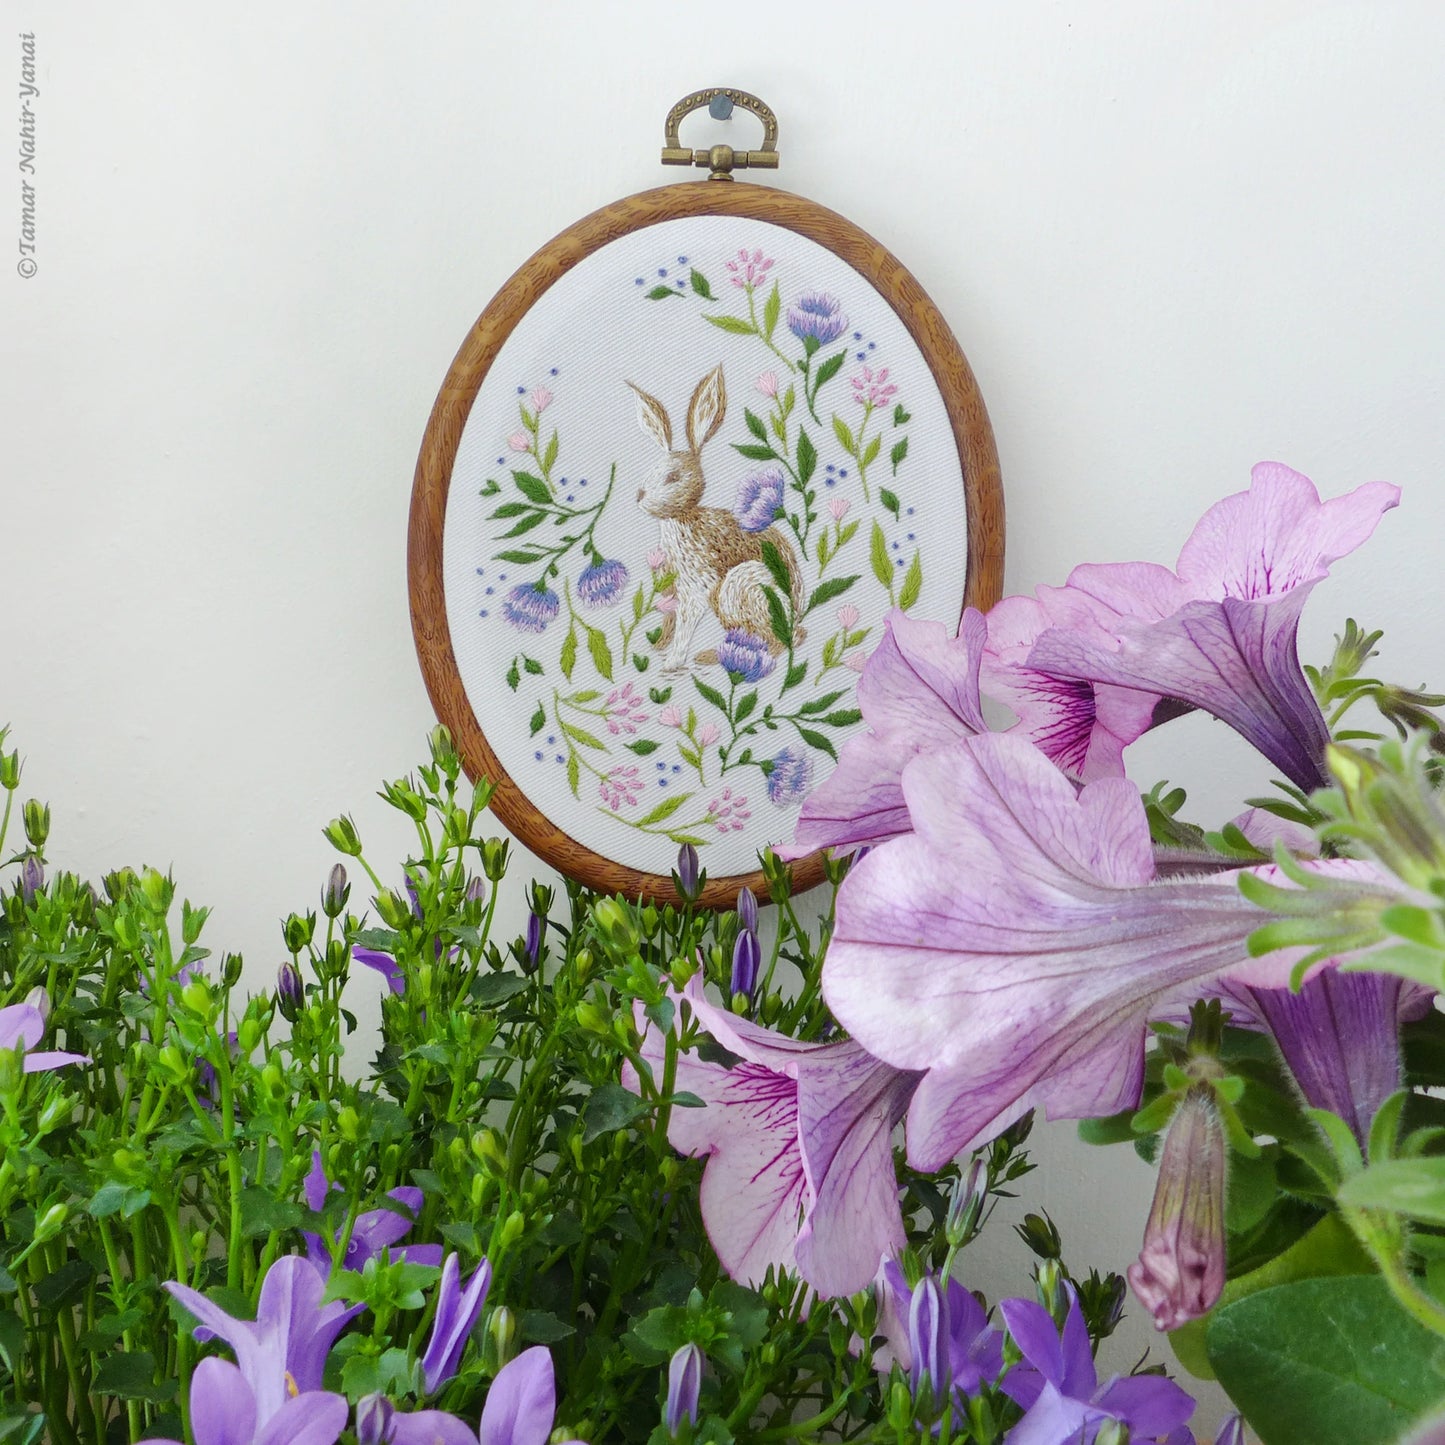 Garden Bunny embroidery kit